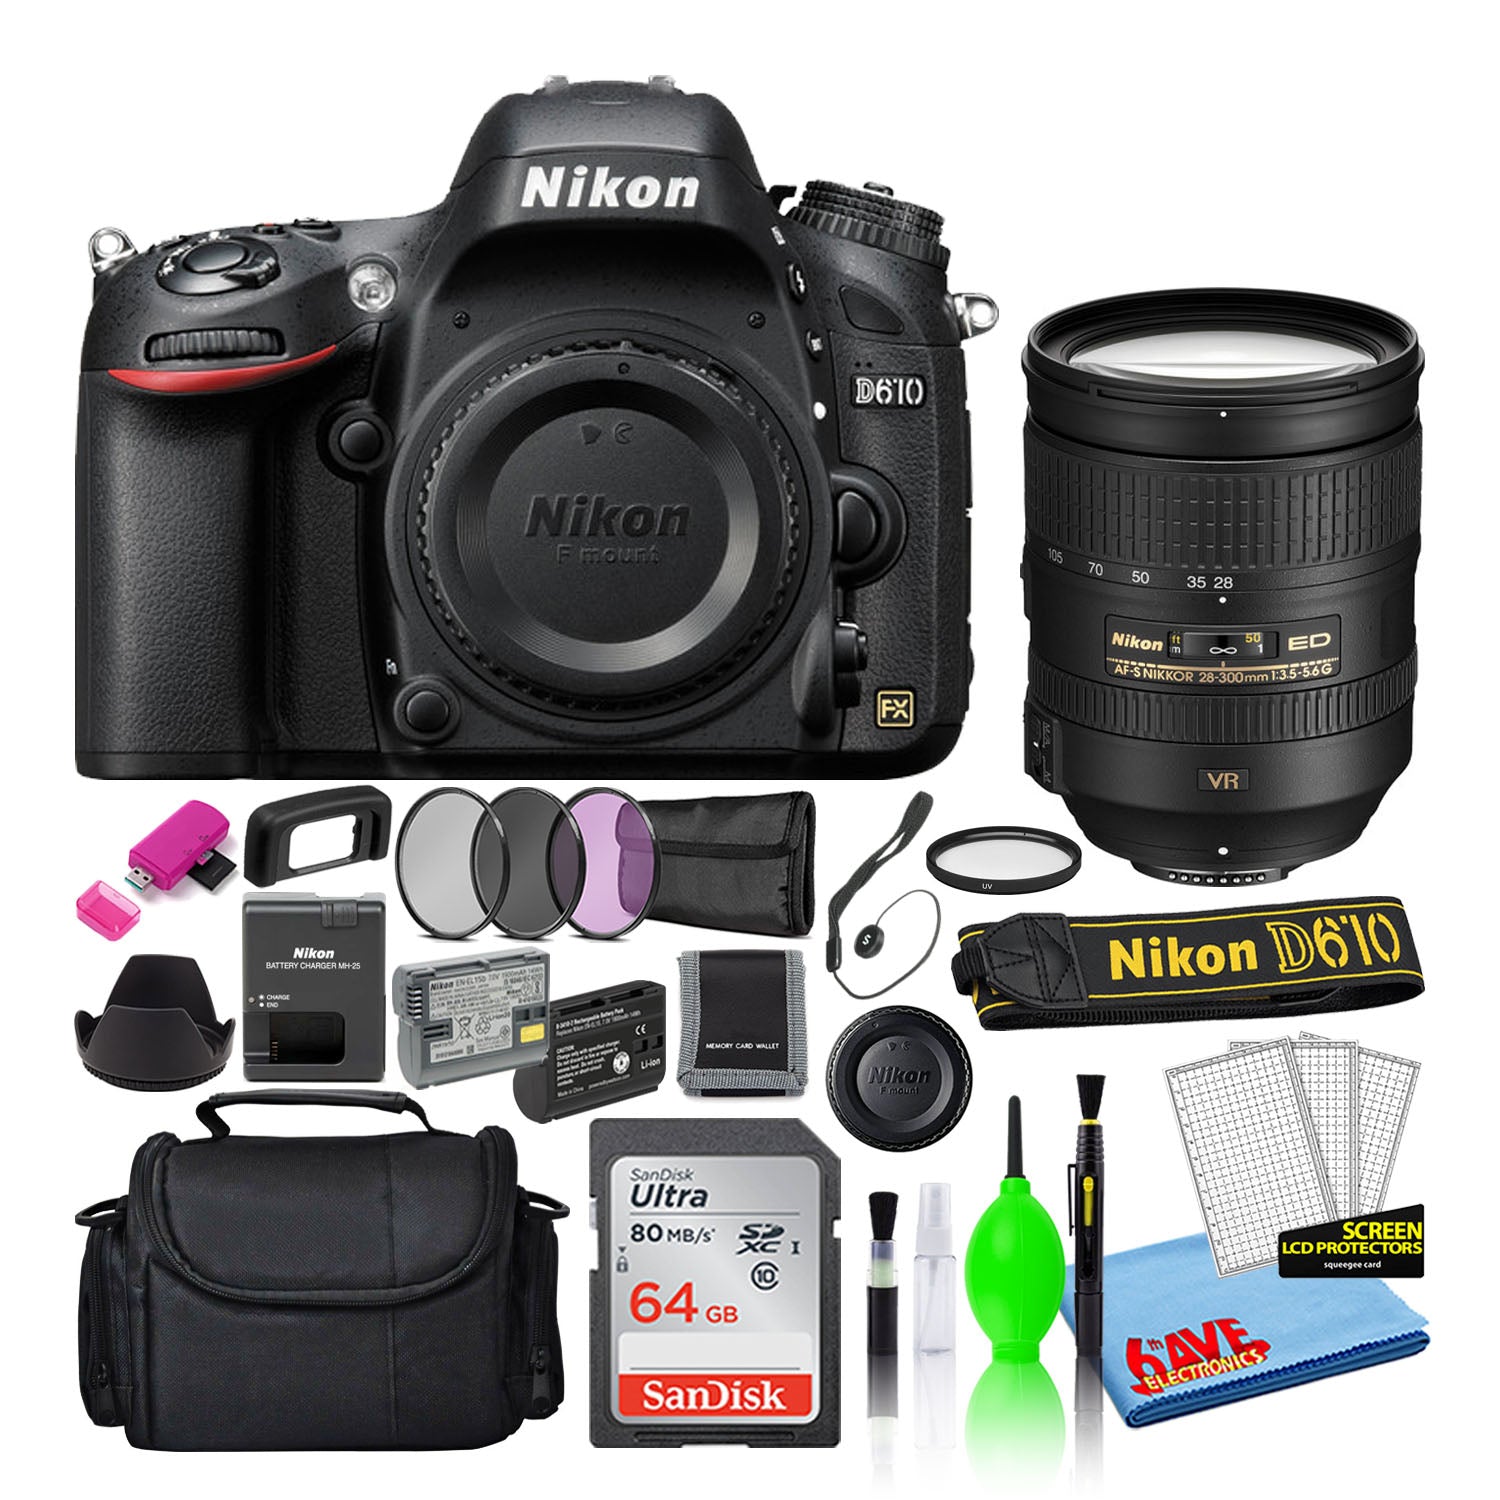 Nikon D610 Digital Camera with 28-300mm Lens (1540) with 64GB Card + Bag (Intl)